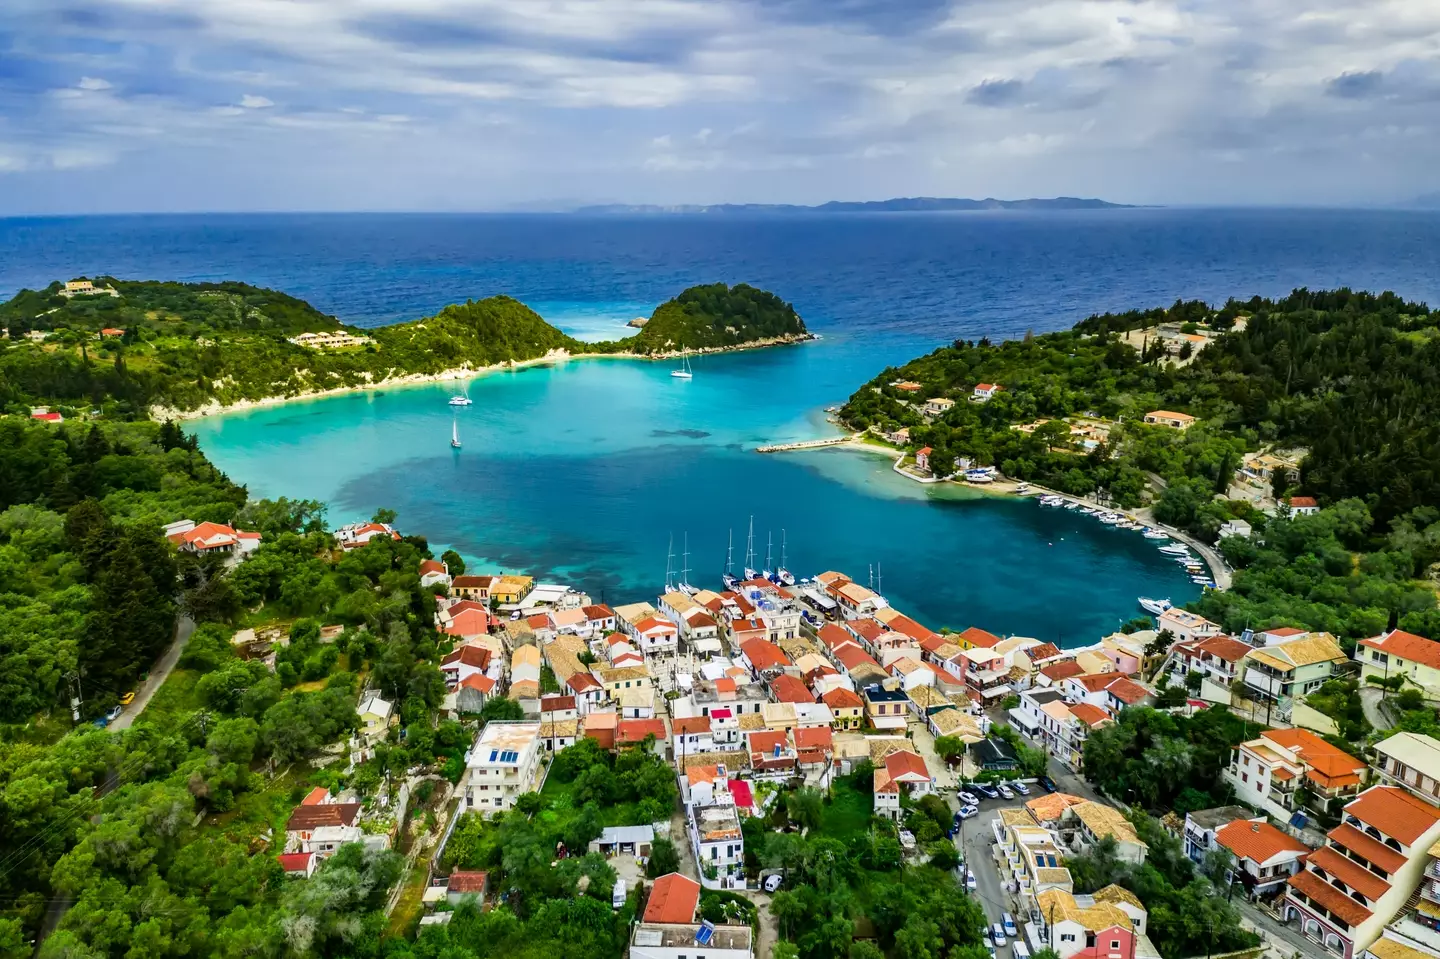 Paxos, a small island near Corfu (Getty Stock Images)